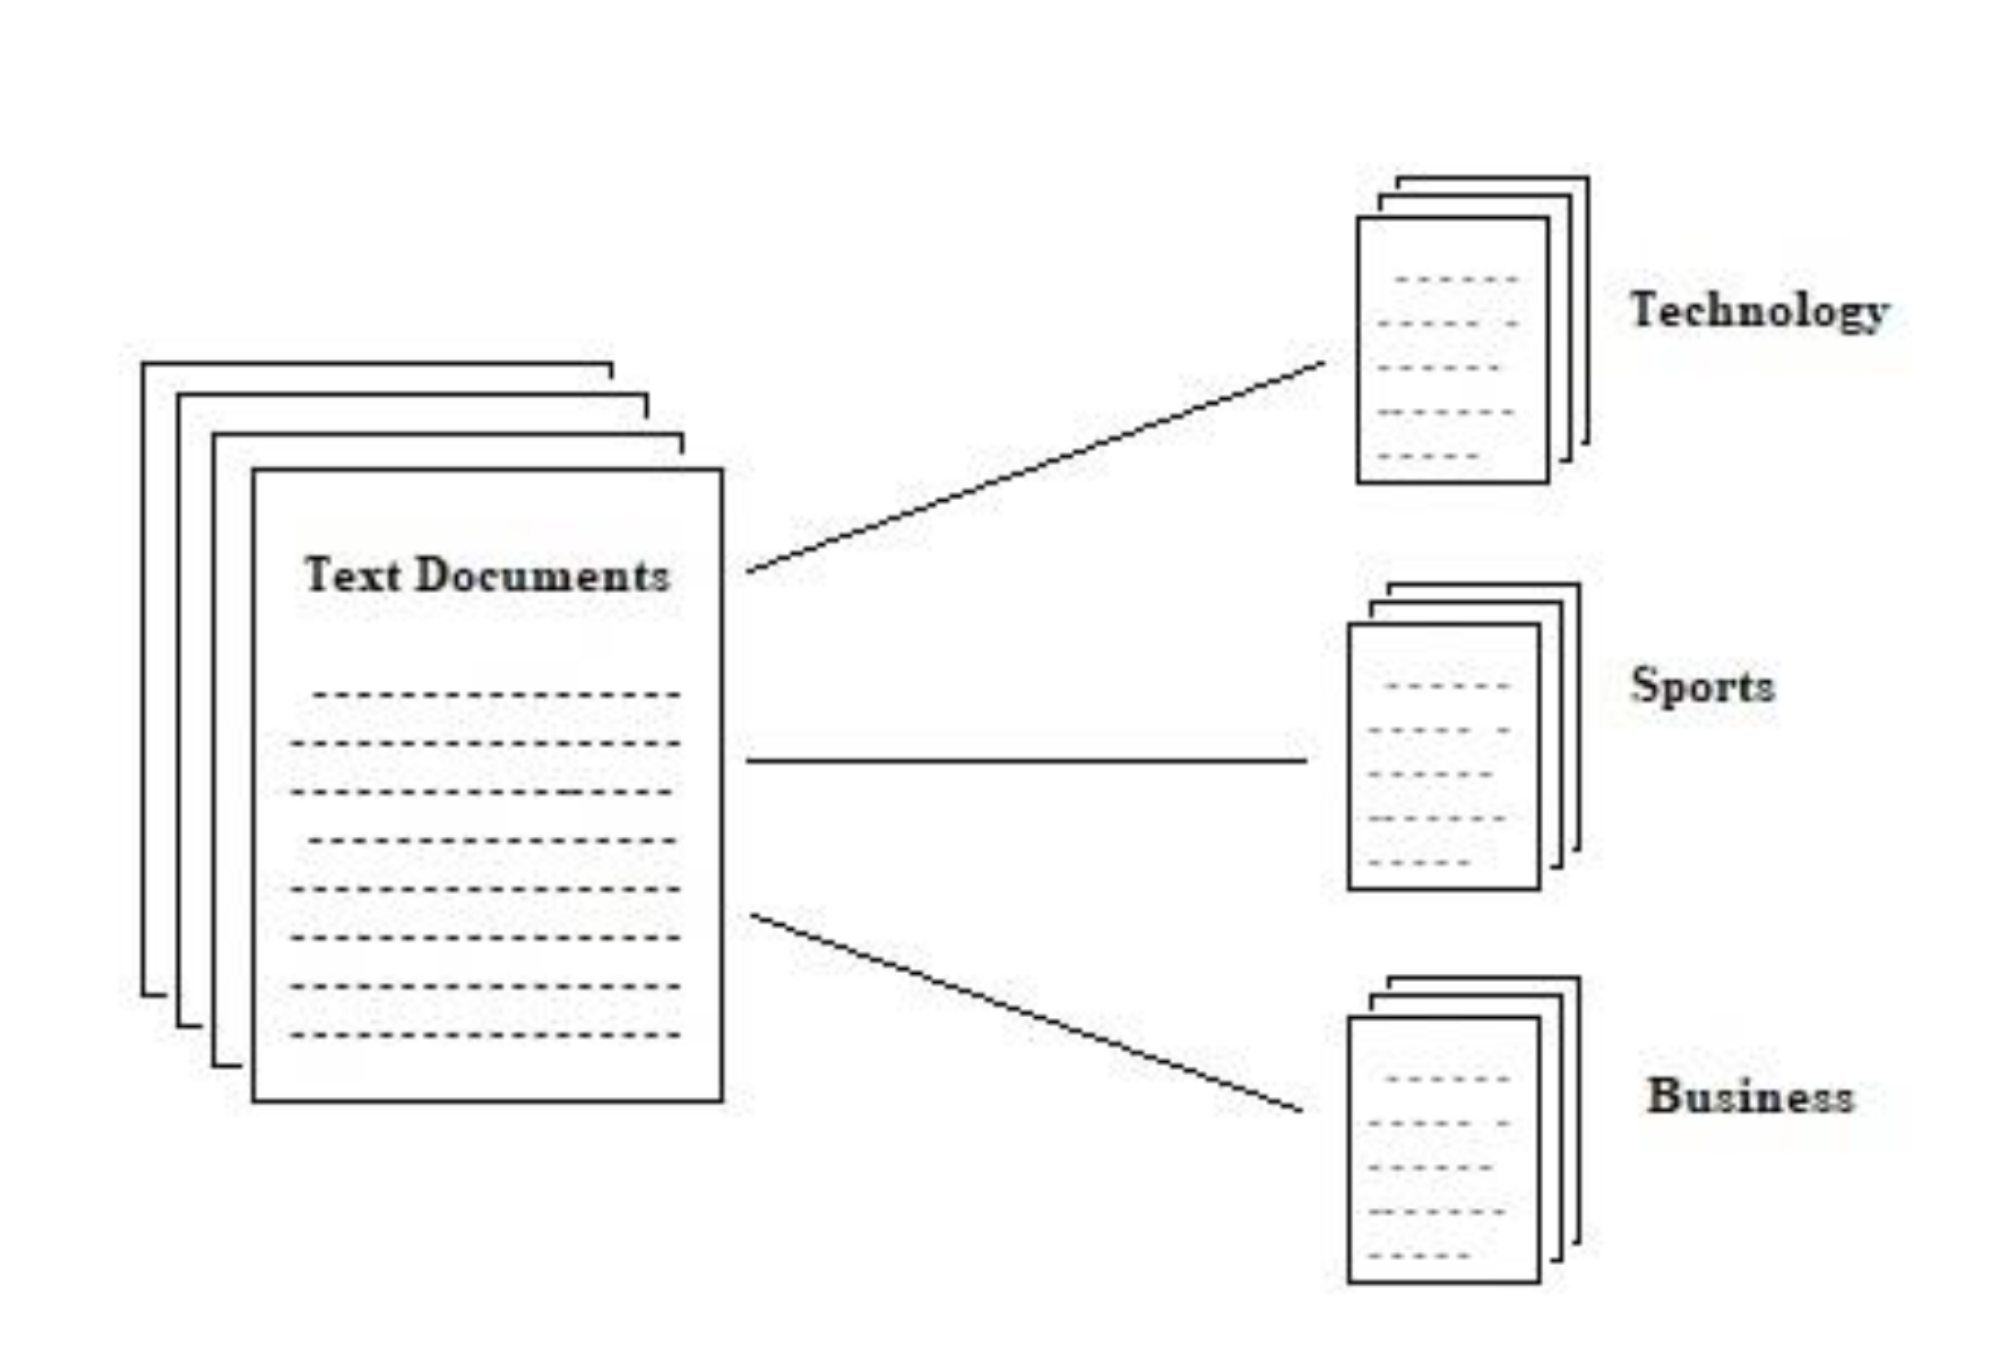 Document Classification: Machine Learning Vs. Rule-Based Methods